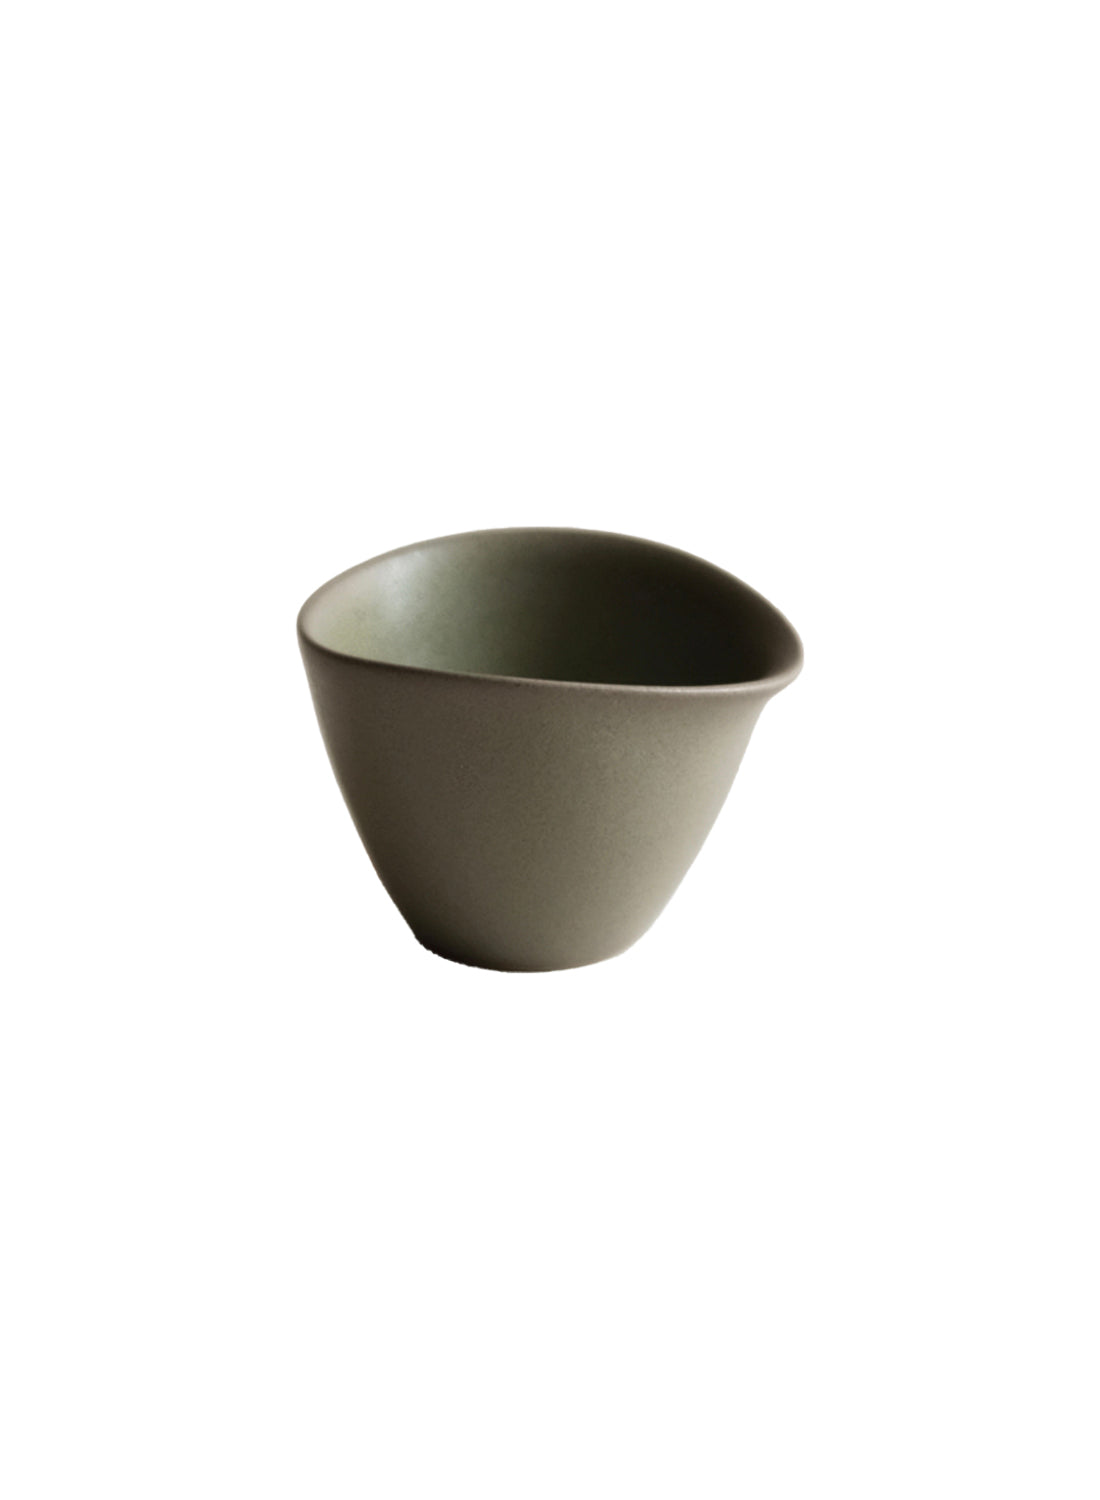 NR Ceramics Small Tea Cup, forest green